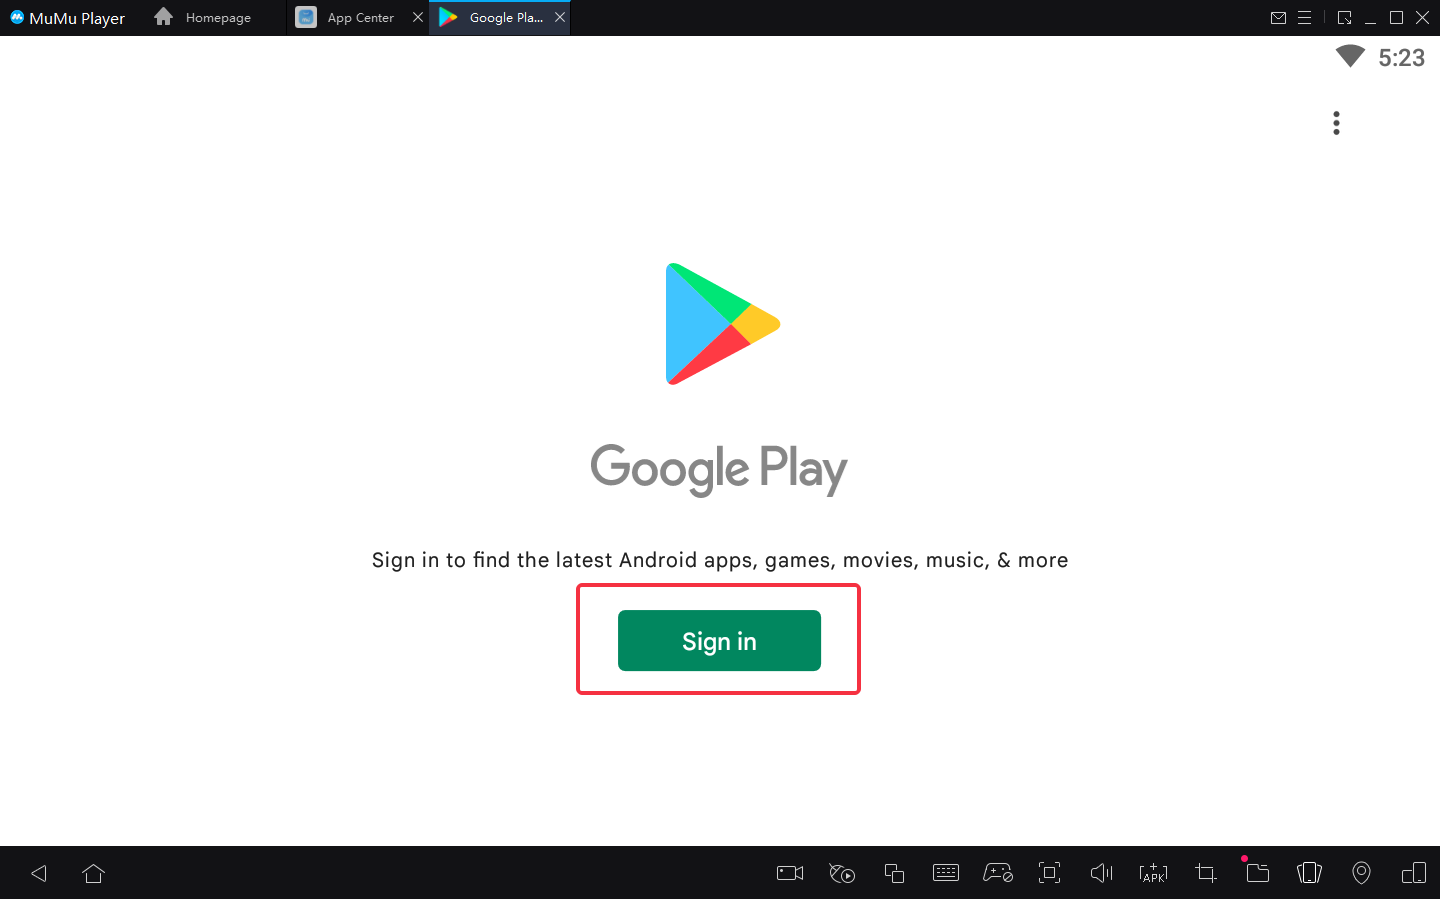 Gacha Life 2 - Apps on Google Play